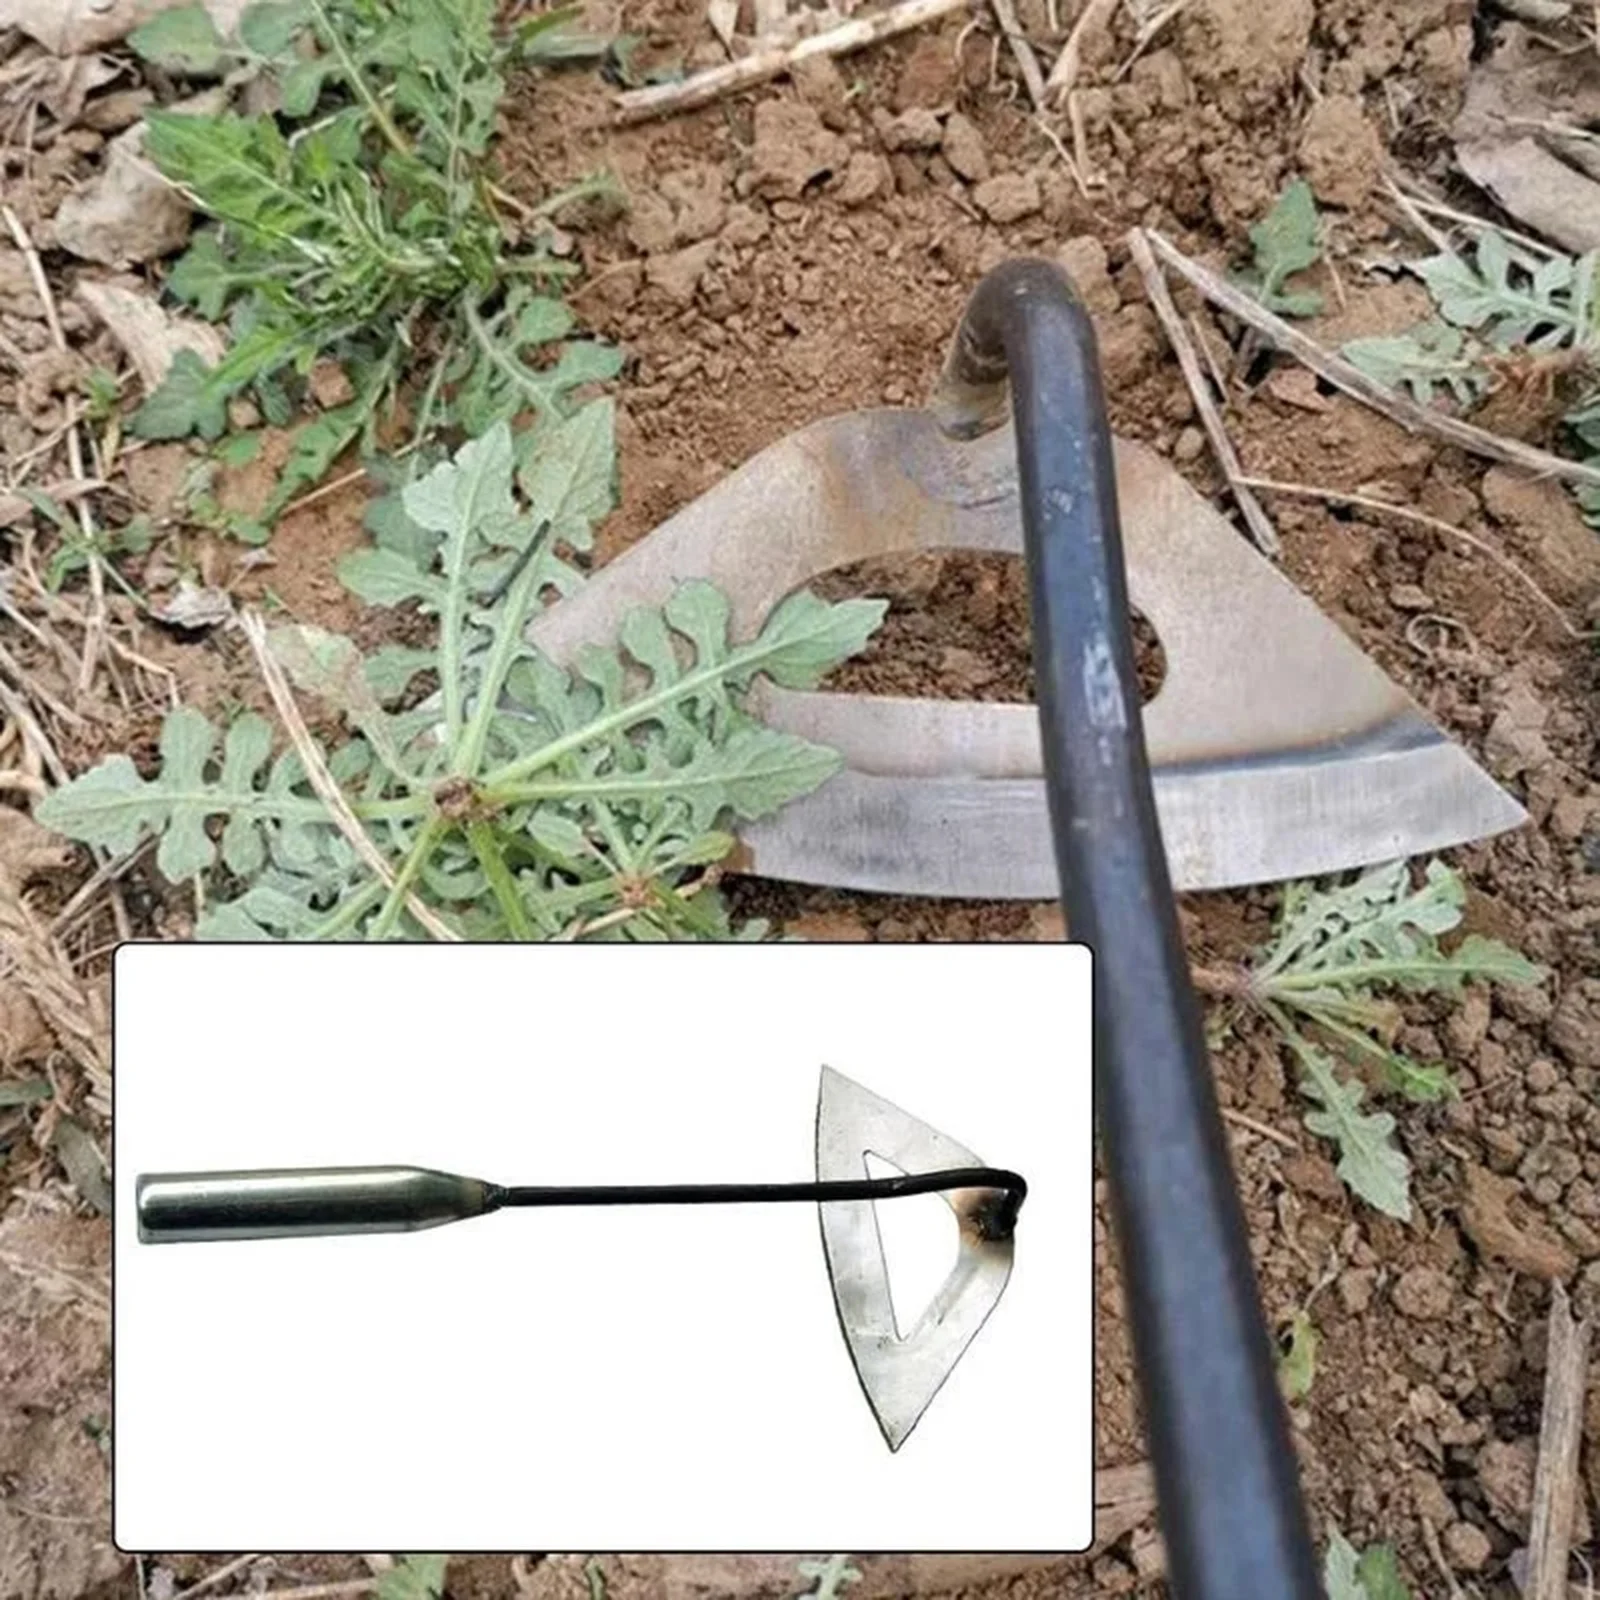 Welded Garden Hoe Carbon Steel Tilling Weeding Digging Rake Hand Tool Sickle Digging Gardening Vegetable Planting Garden Tool